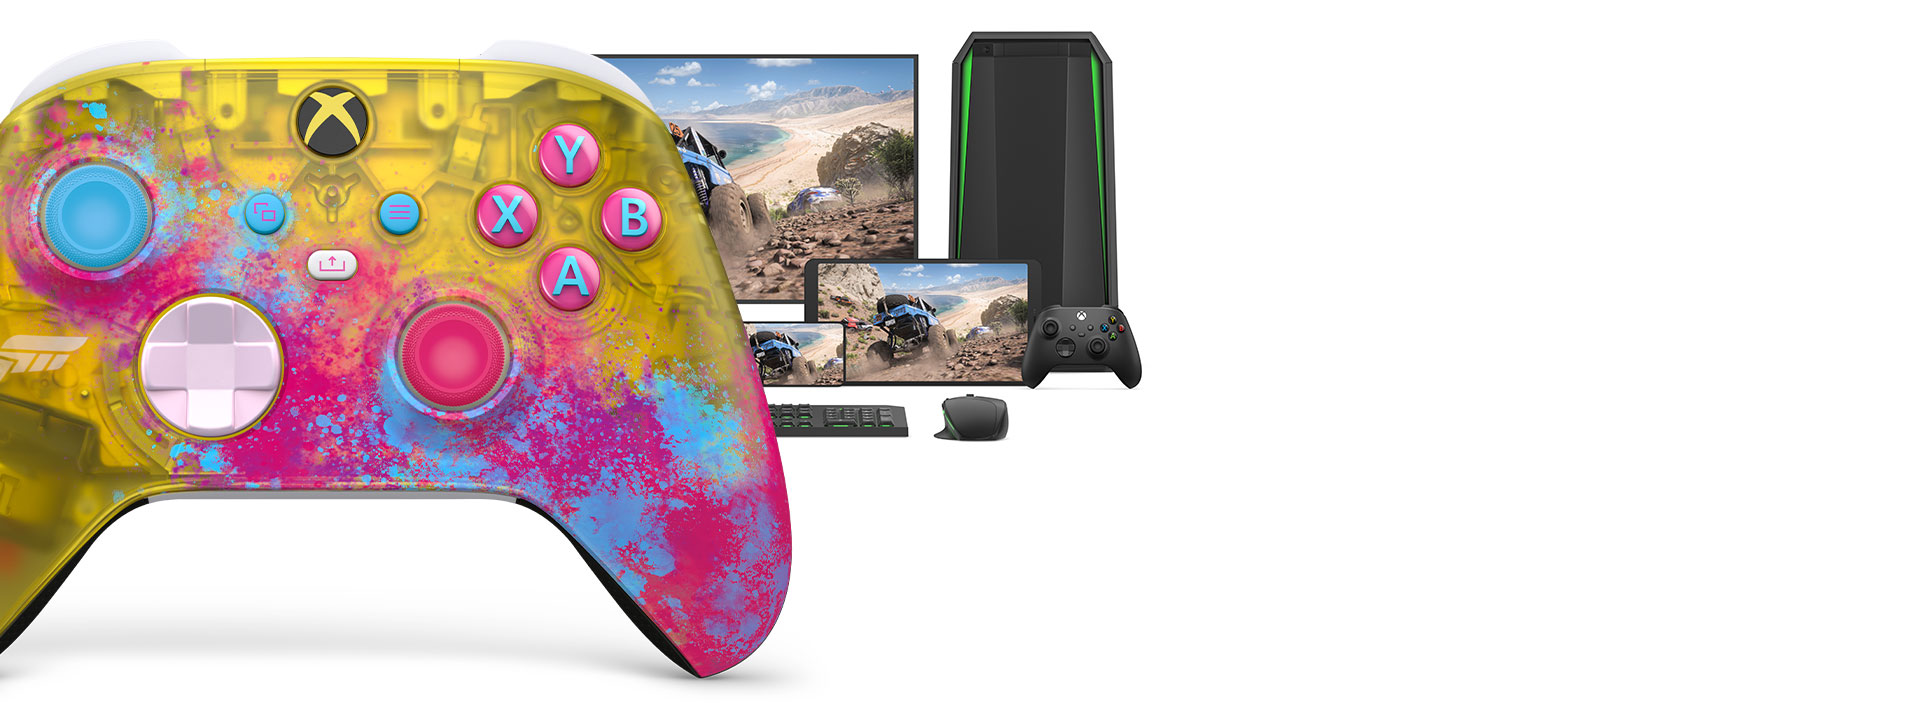 Mando inalámbrico Xbox – Forza Horizon 5 con un equipo, TV y Xbox Series S